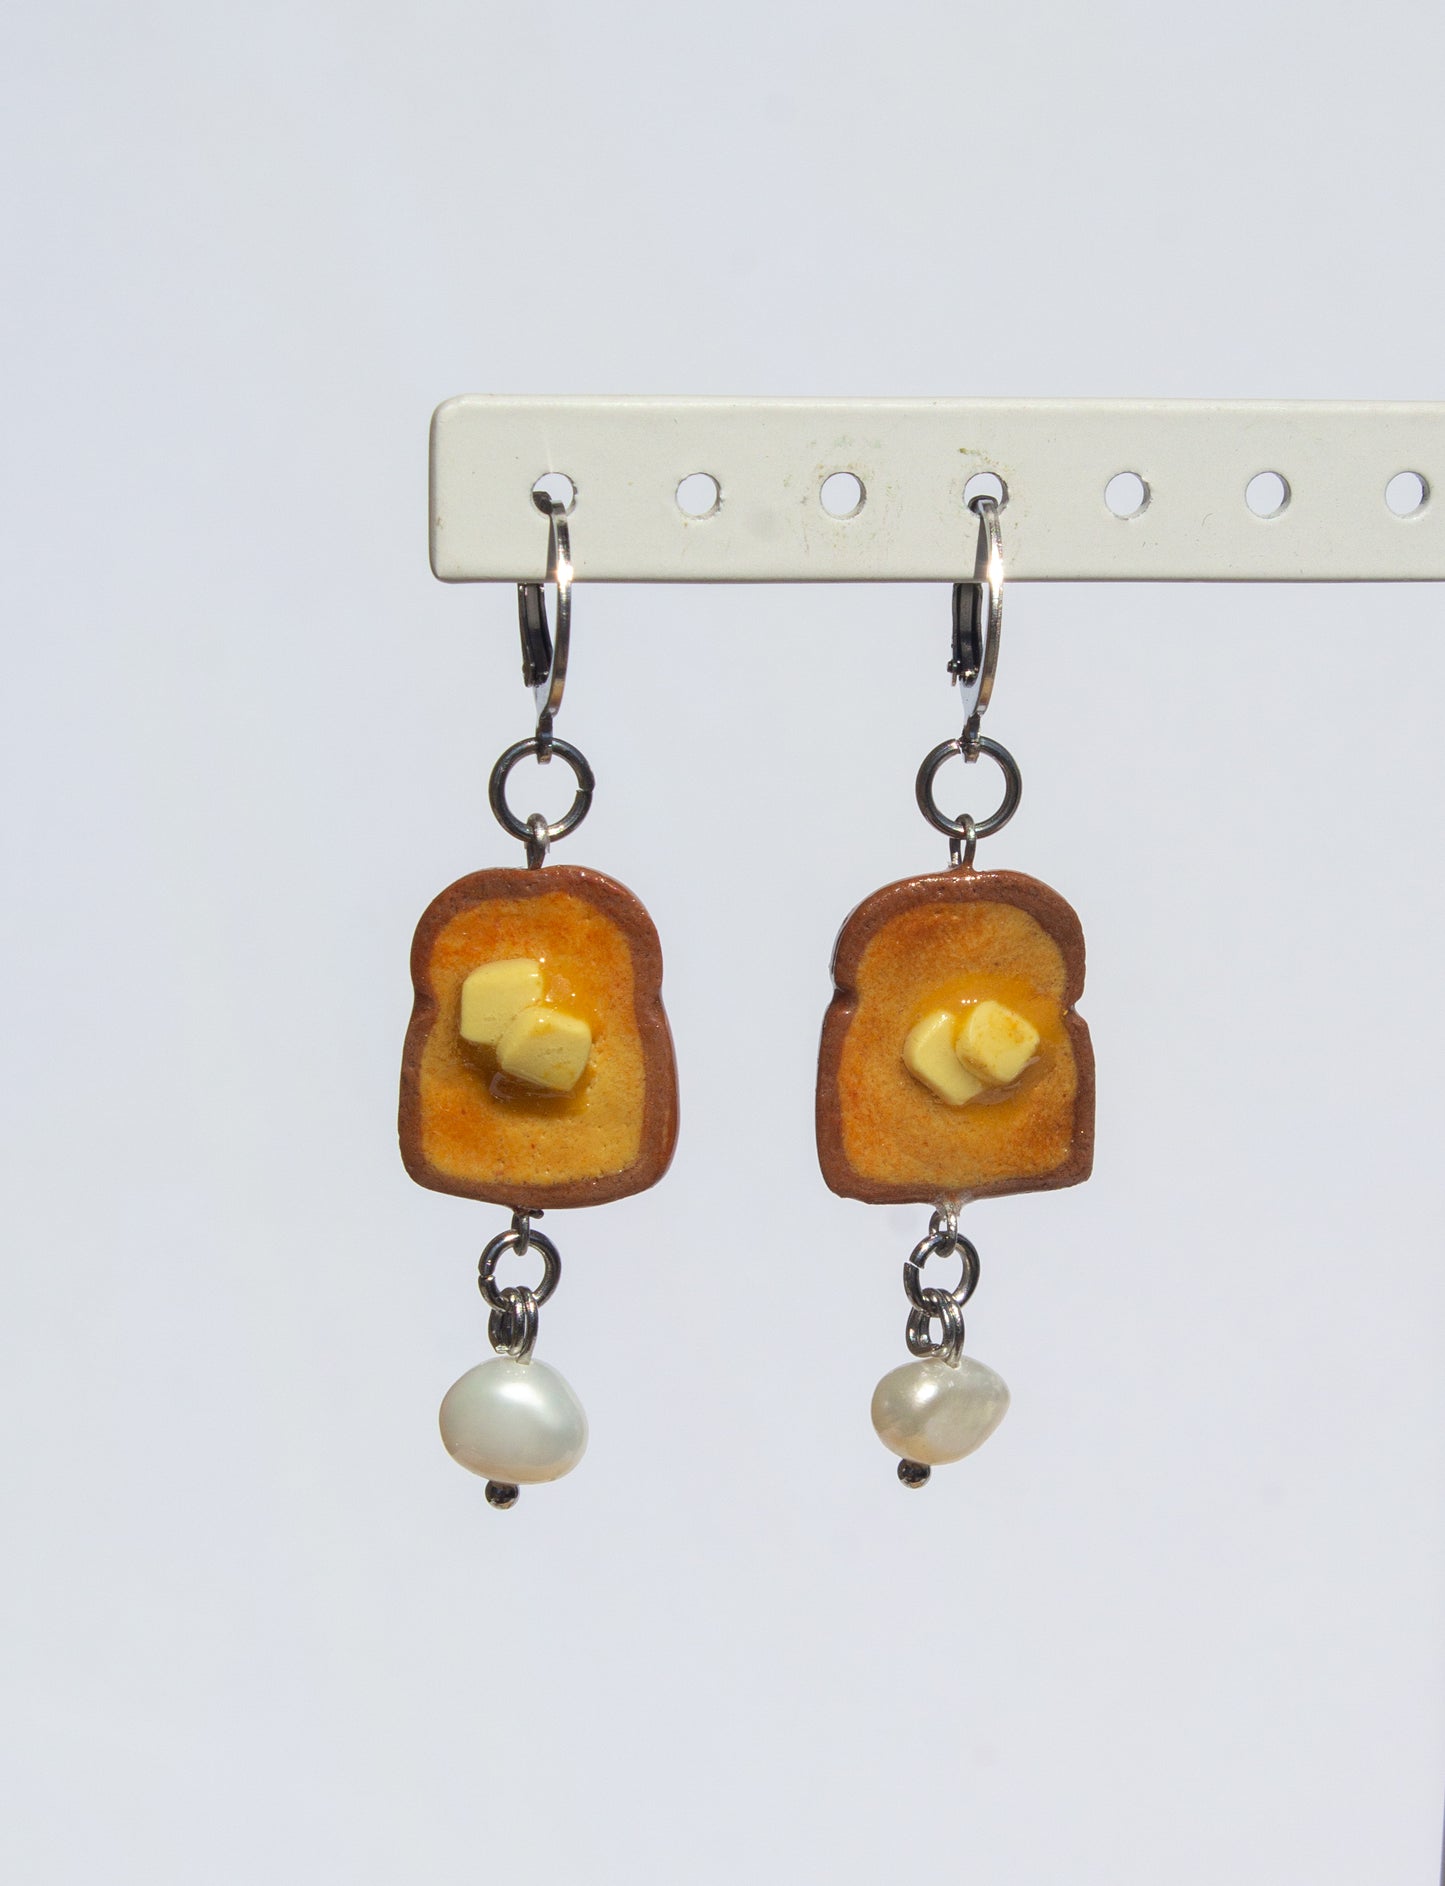 Toast earrings